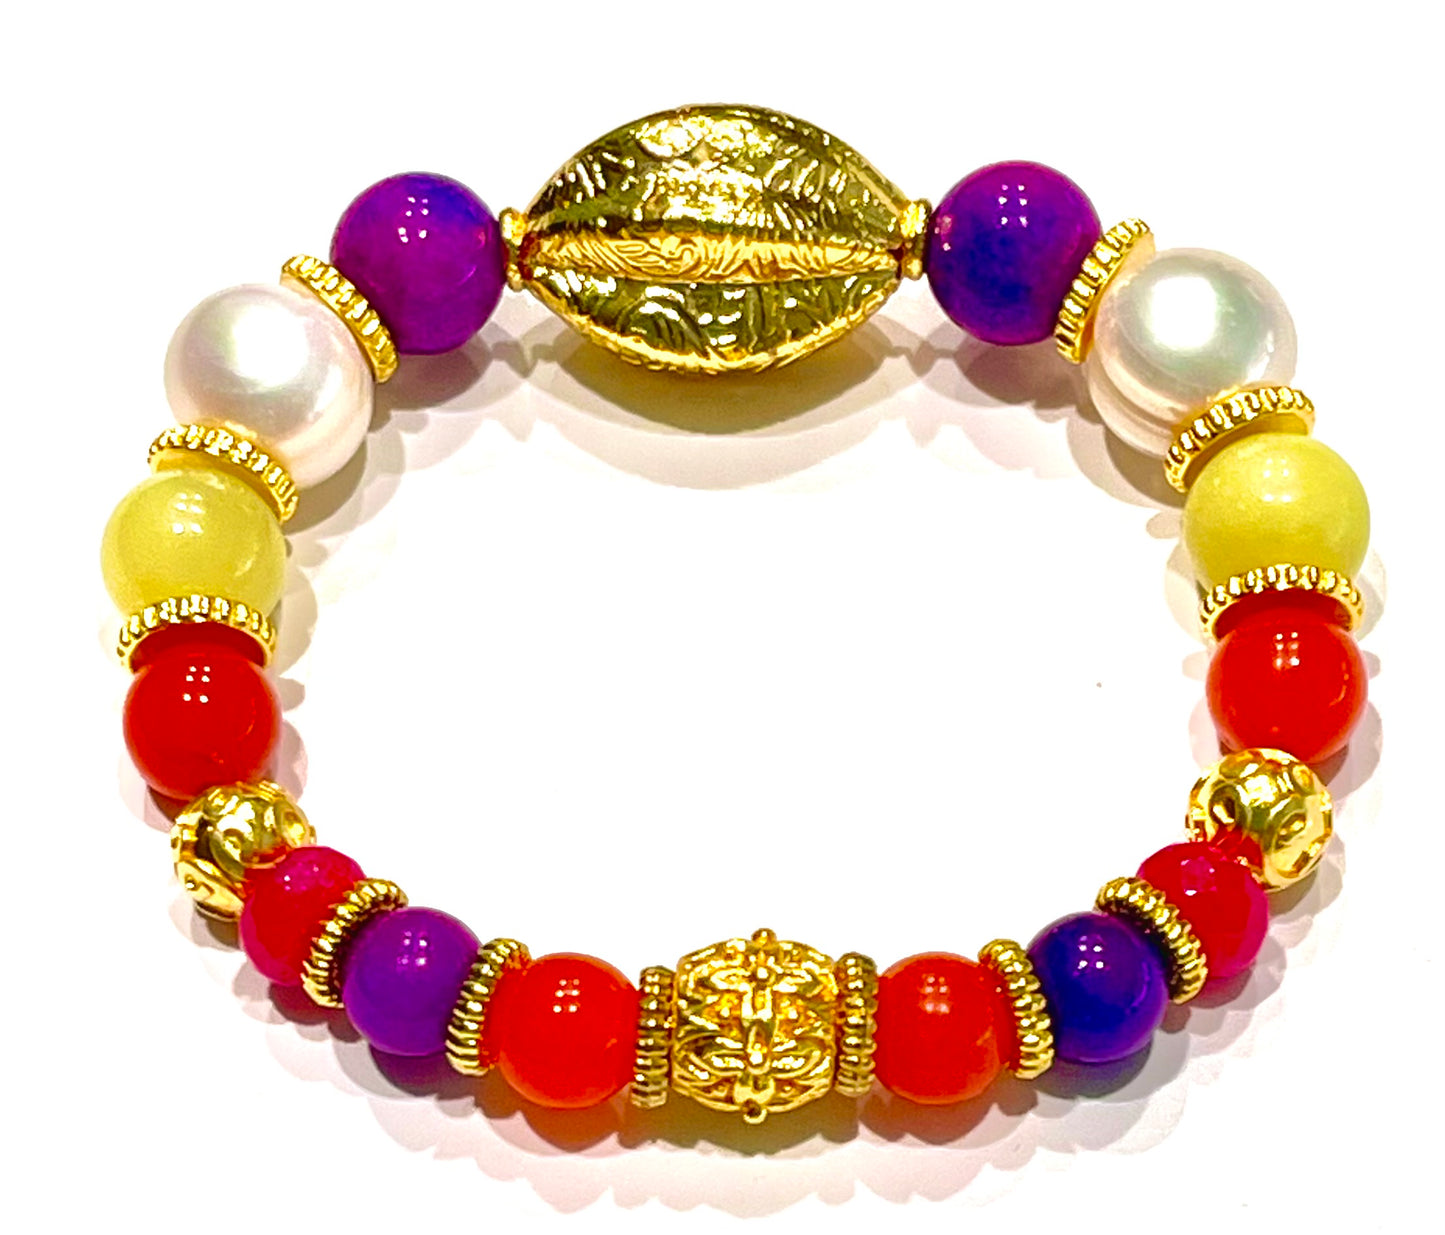 Colorful Mixed Gemstones Sugilite, Quartz and Pearls Gold Beaded Bracelet